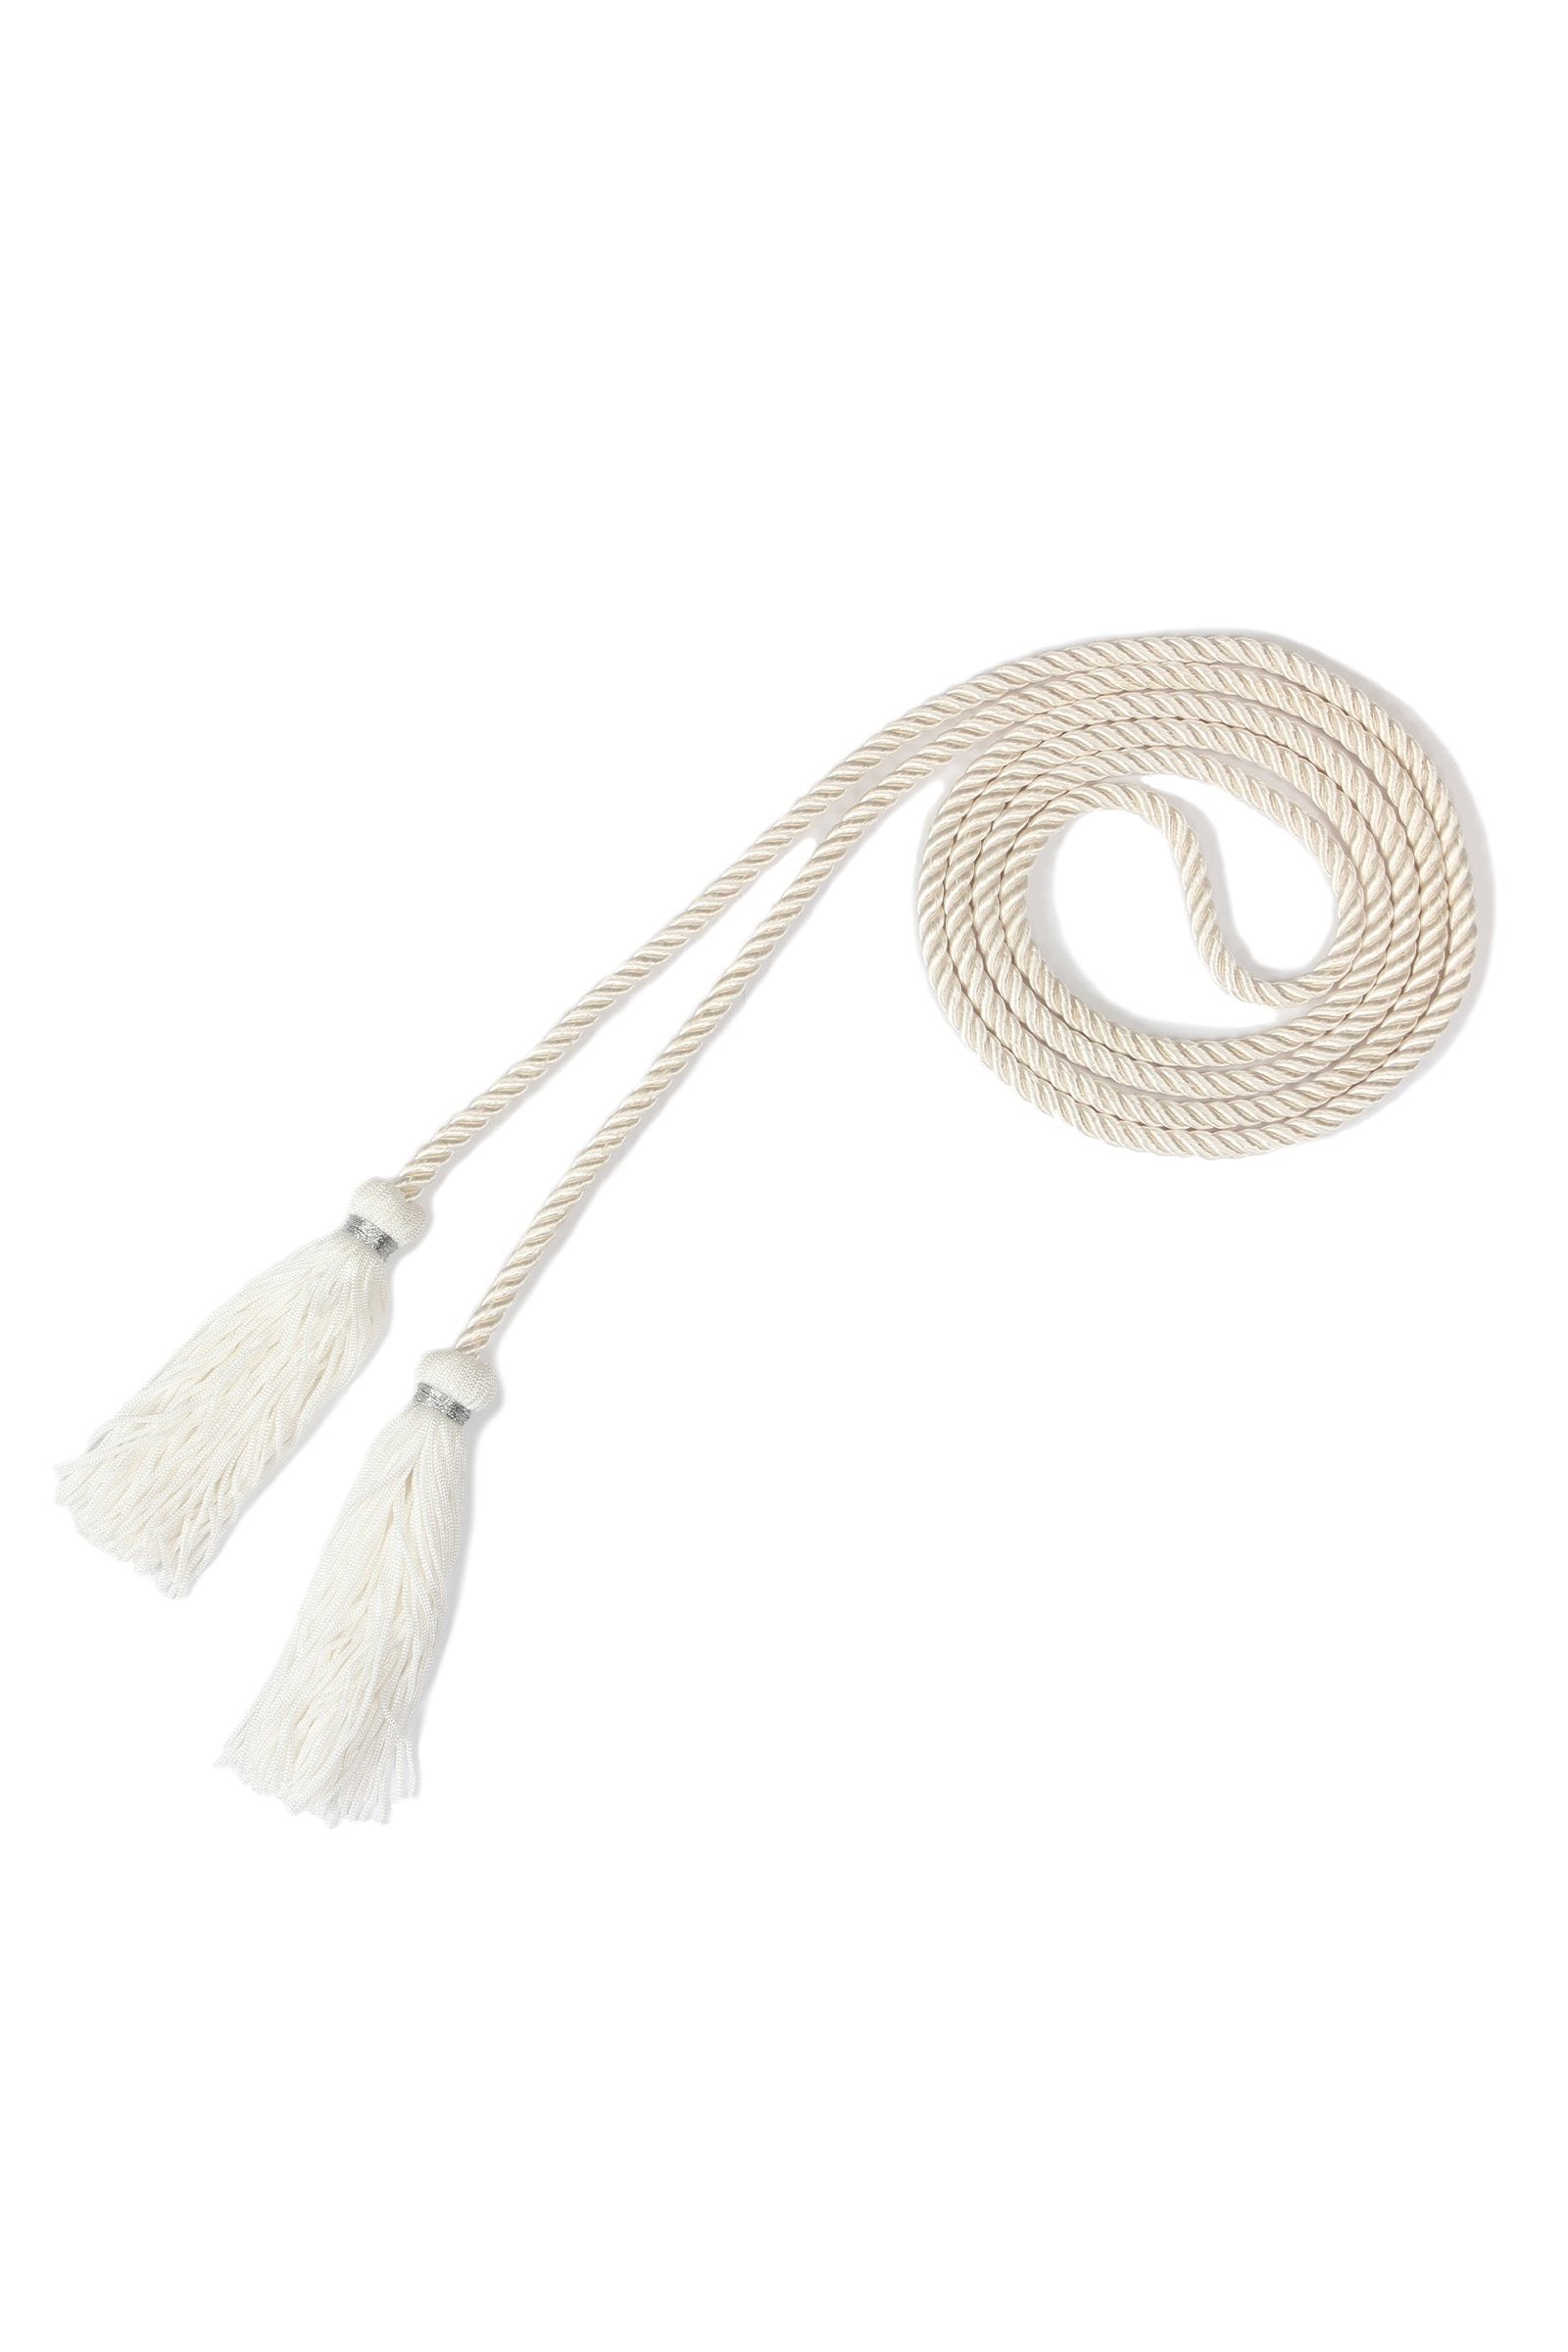 White Rope Belt, Single Wear, Single Knot, Small - Cloak & Dagger Creations